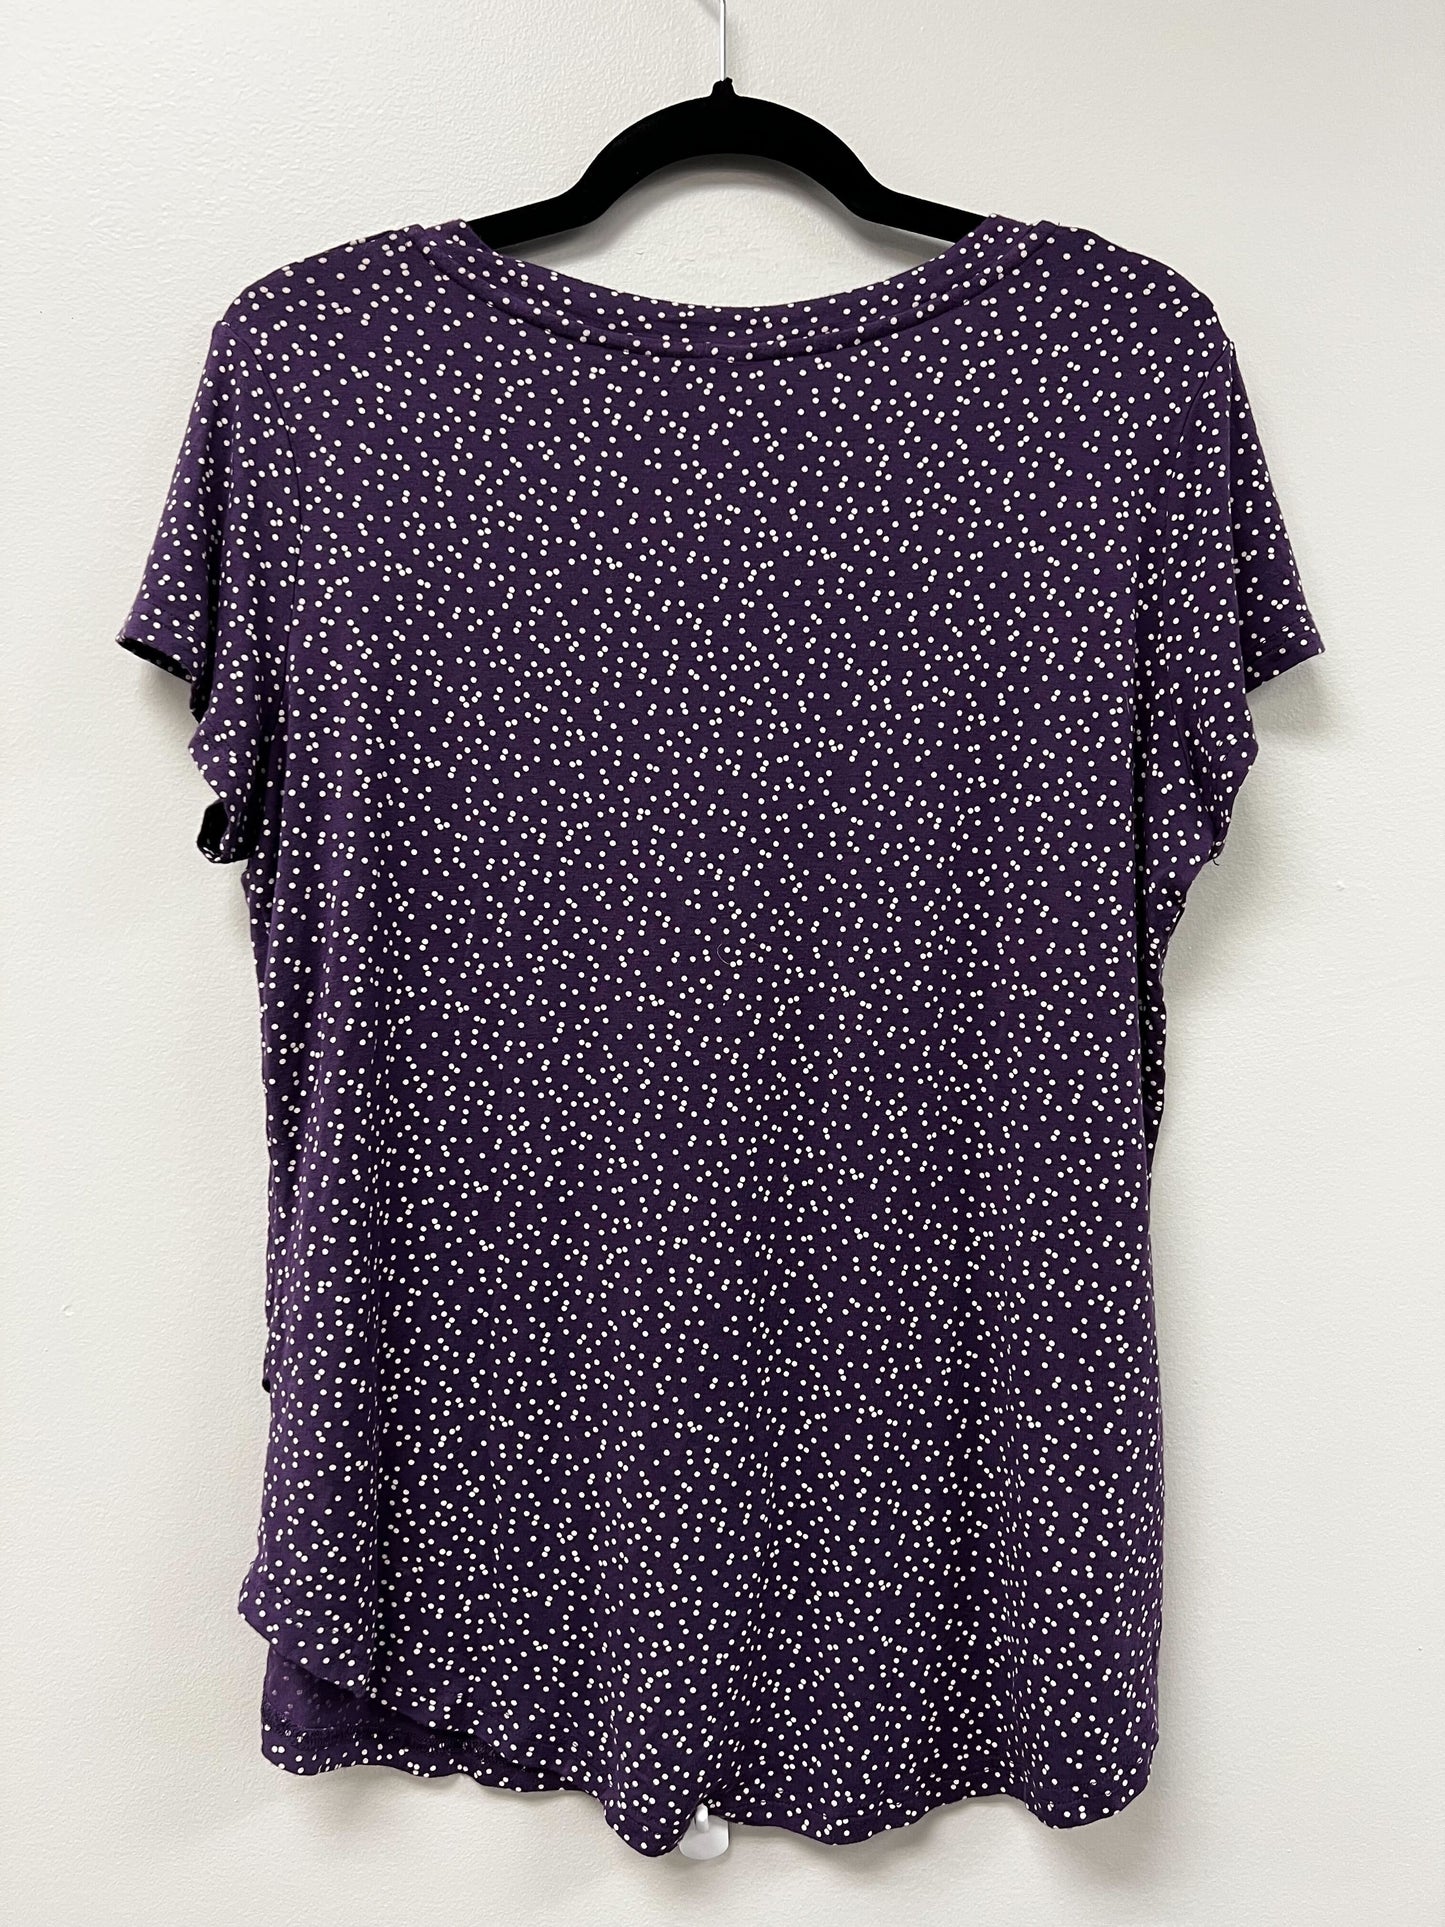 Outlet 6016 - Printed V-Neck Boyfriend Nursing Tee - Purple Dots - Large